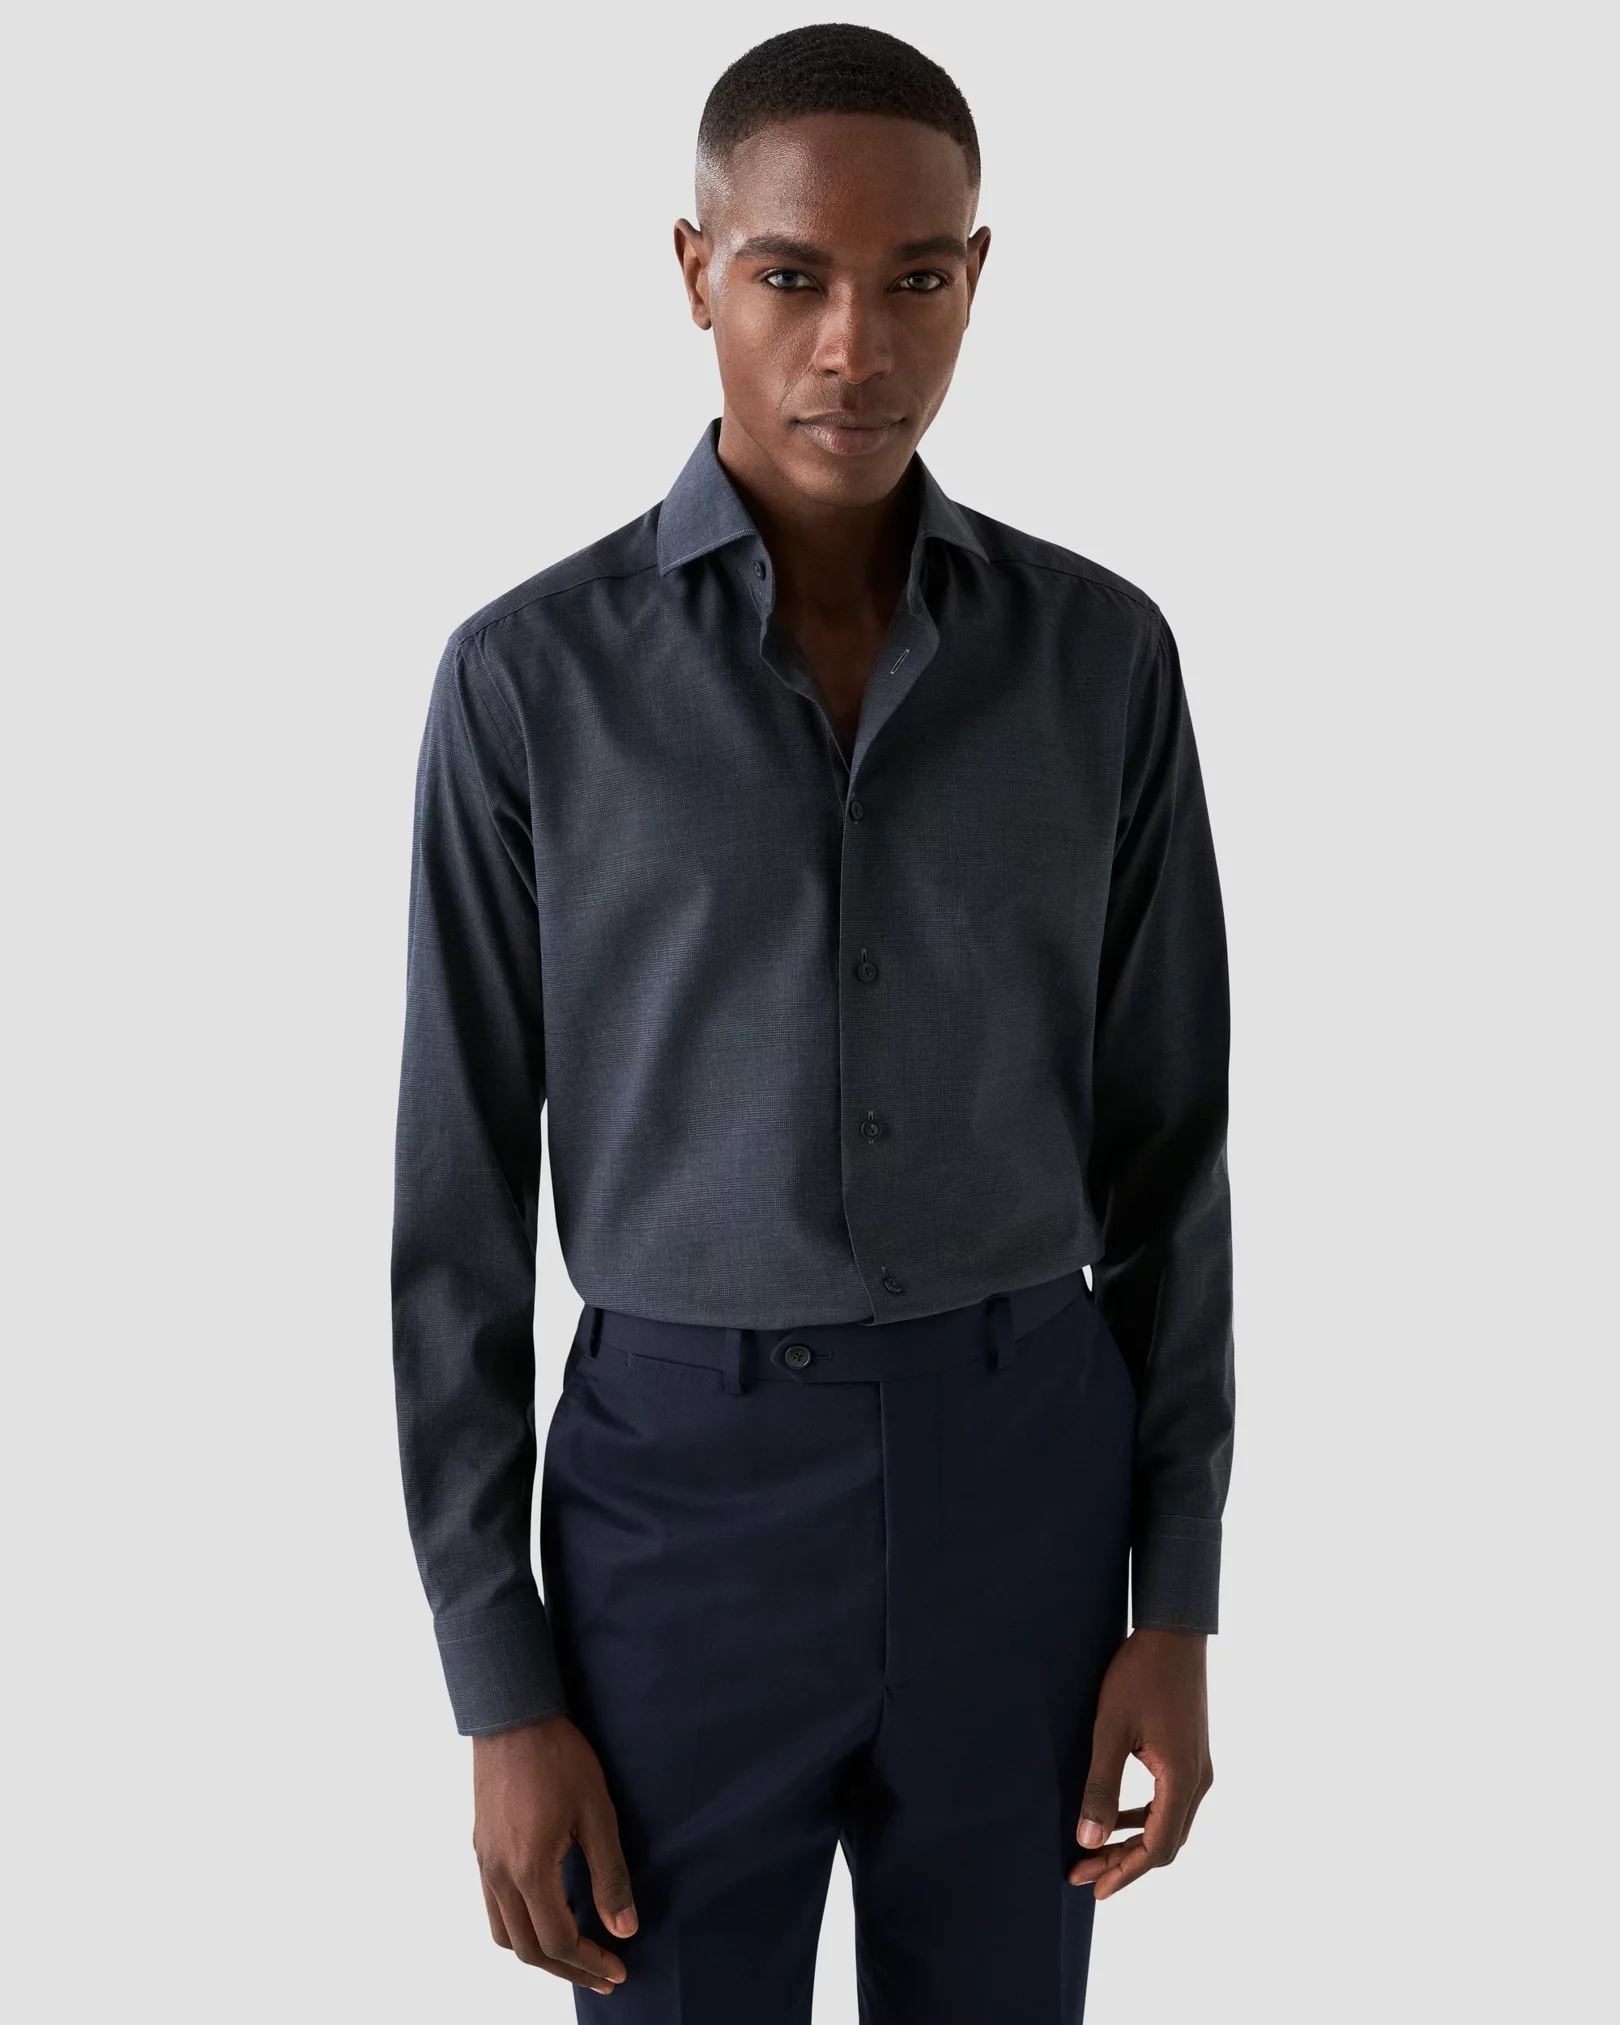 Eton - navy blue flanell widespread shirt